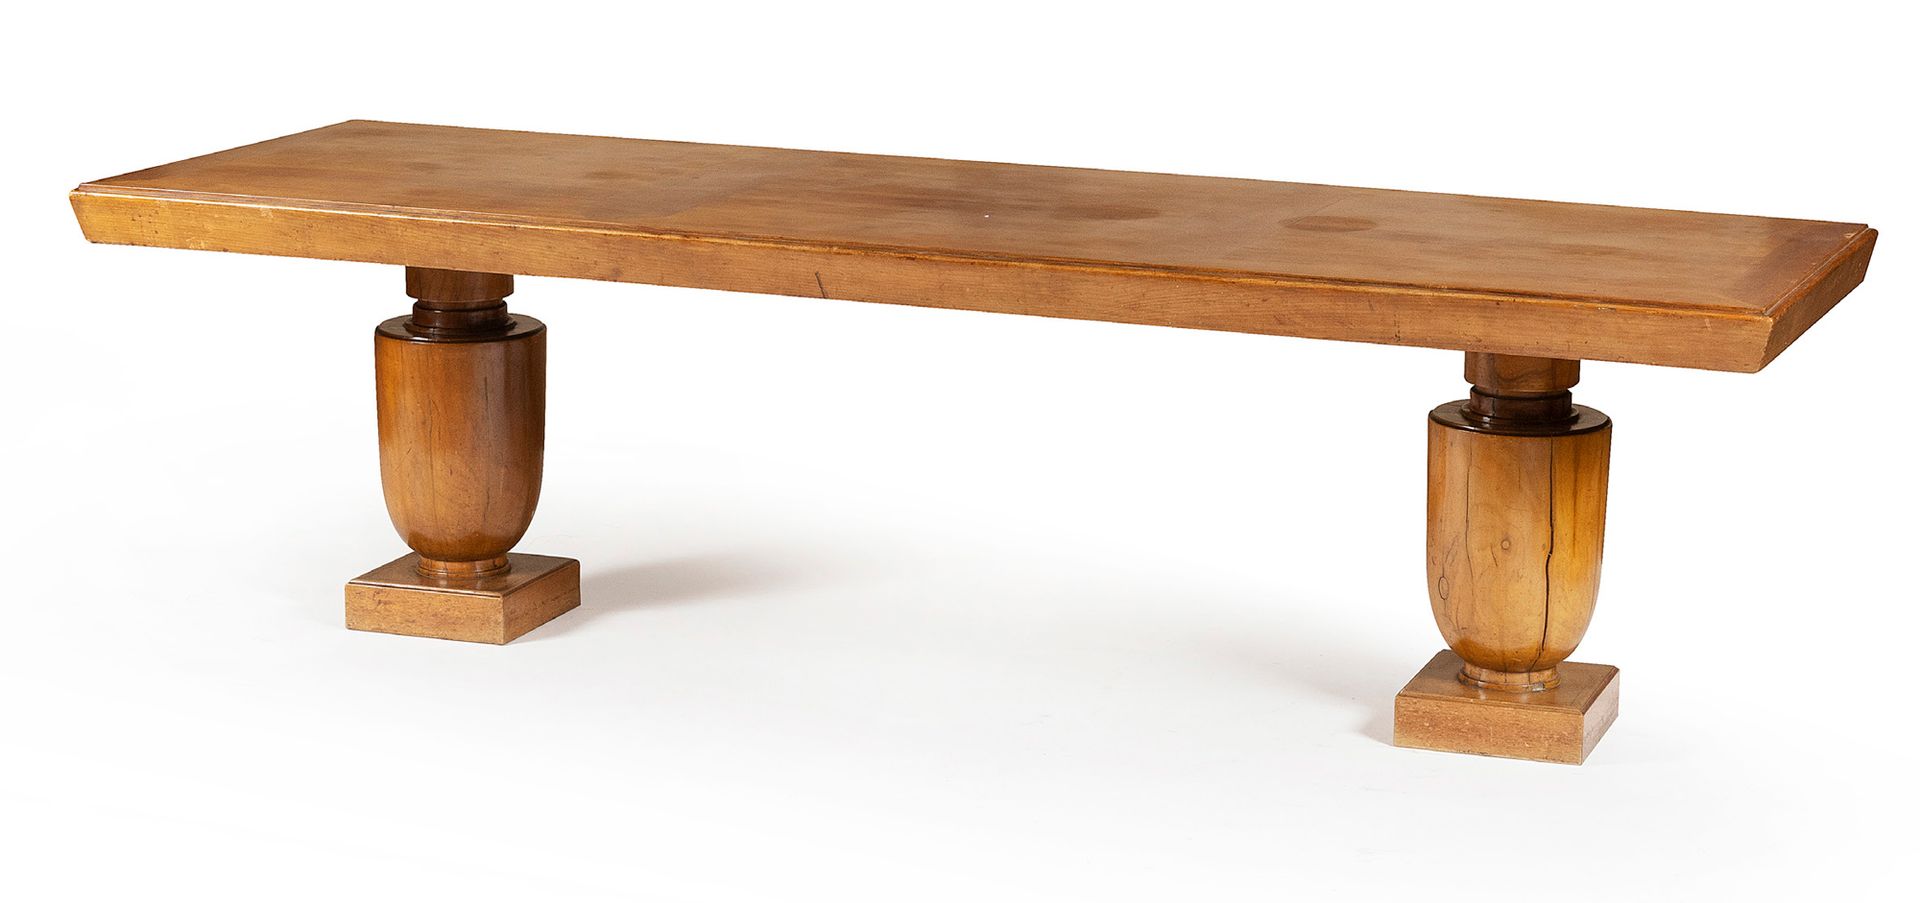 André ARBUS (1903-1969) 重要的控制台桌子。
樱桃木材质。
H.72厘米 - 宽250厘米 - 深80厘米。1937.
状态：顶部有一些污&hellip;